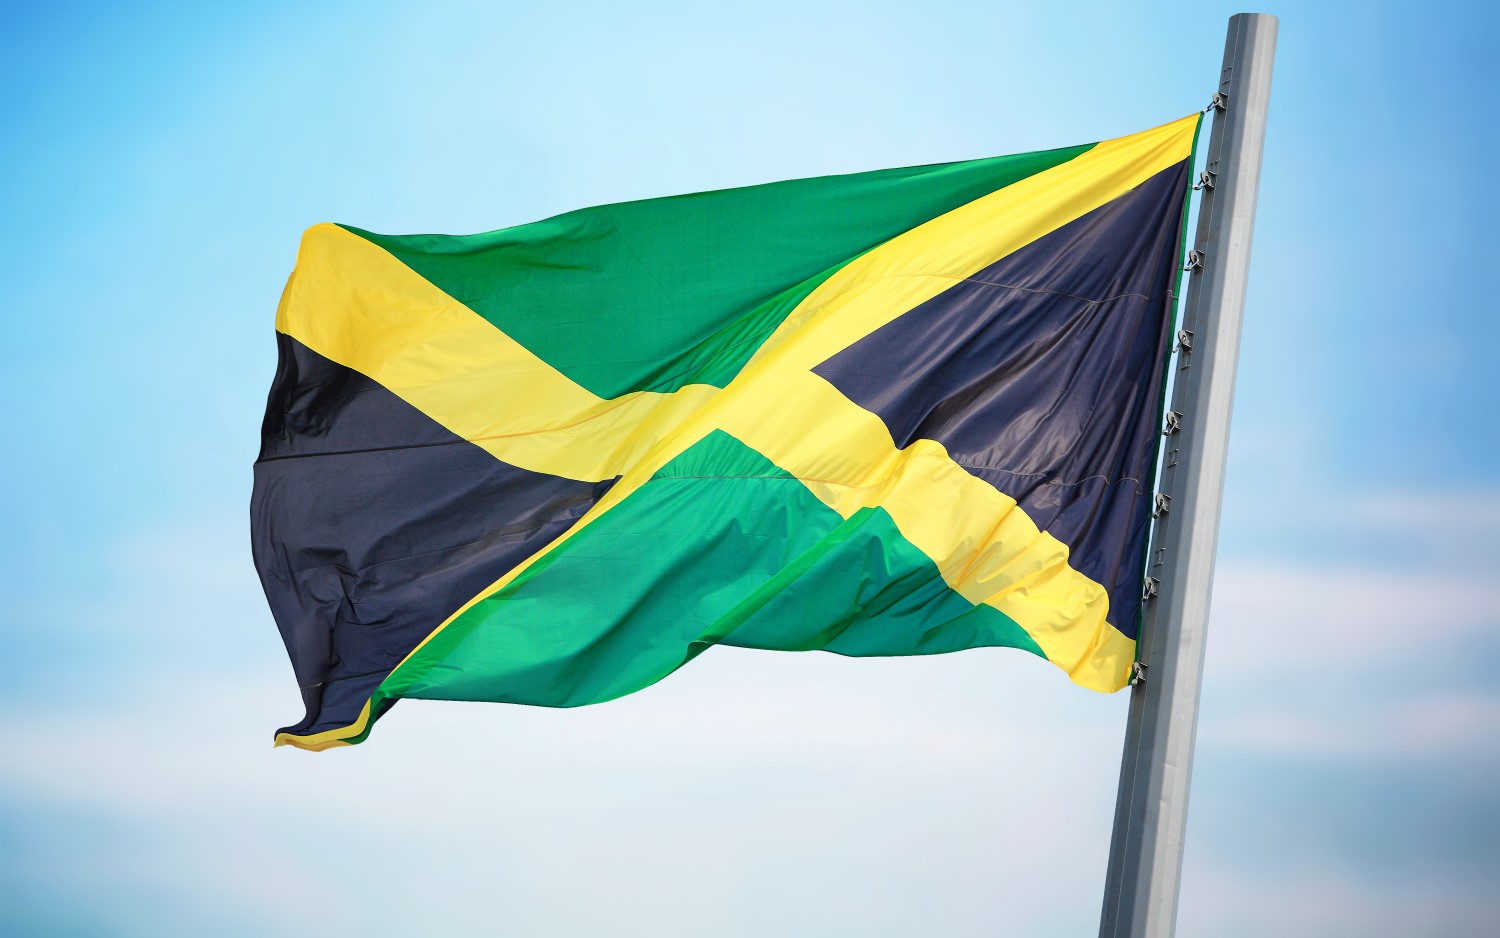 5ZLXNKWHTZHSBHUDIPG6NVLCBI - جامائیکا آزمایش ارزدیجیتال ملی را تکمیل می کند، انتظار می رود اواخر امسال نیز عرضه شود